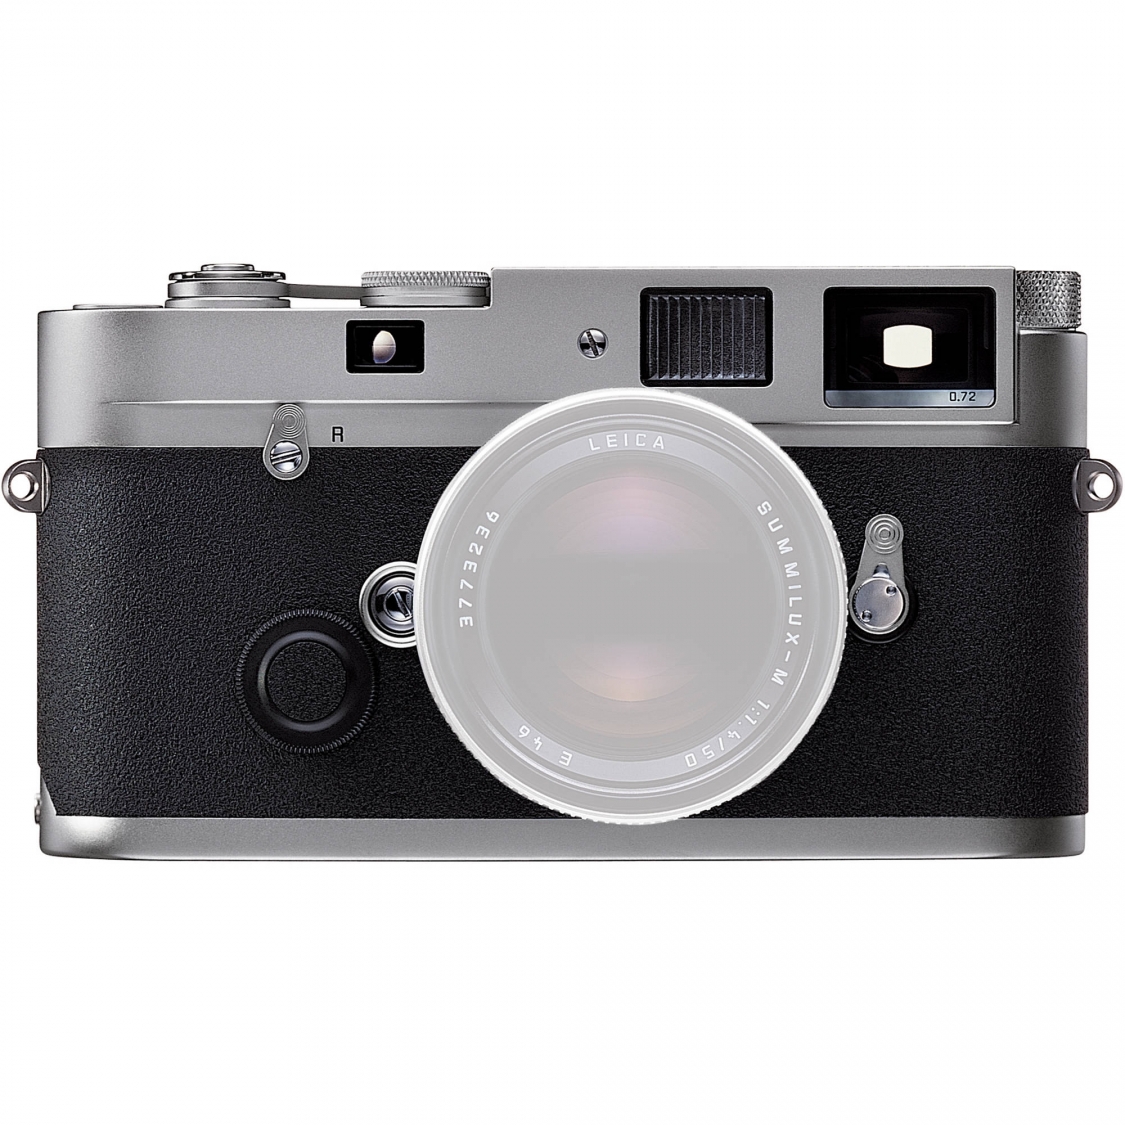 Leica M-P Range Finder Camera (silver)